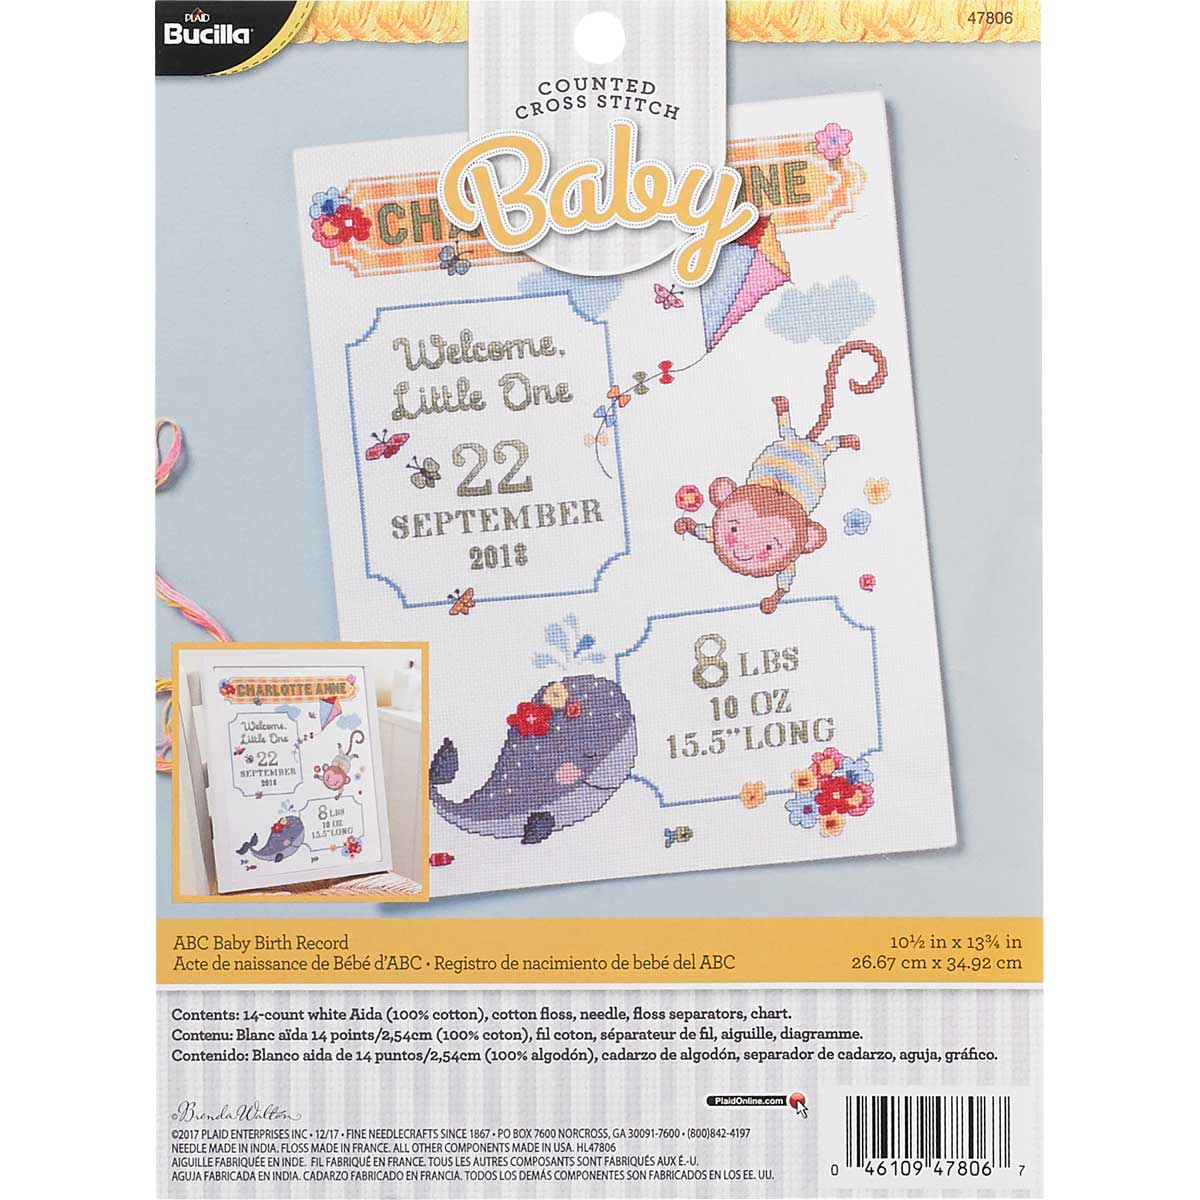 Bucilla ® Baby - Counted Cross Stitch - Crib Ensembles - ABC Baby - Birth Record Kit - 47806